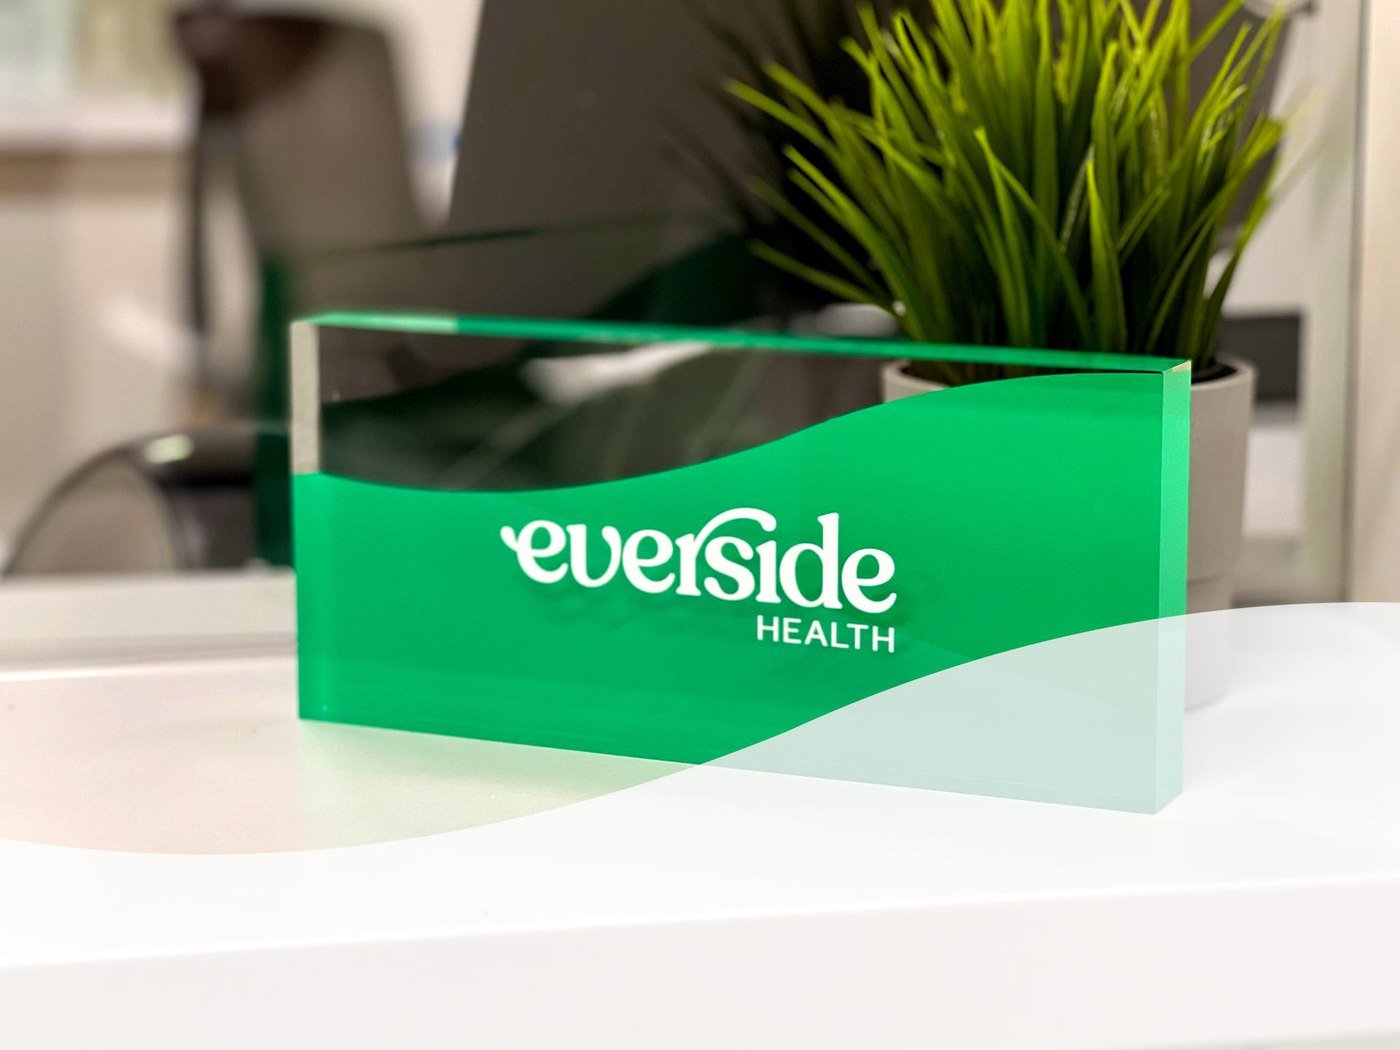 everside health logo on an award